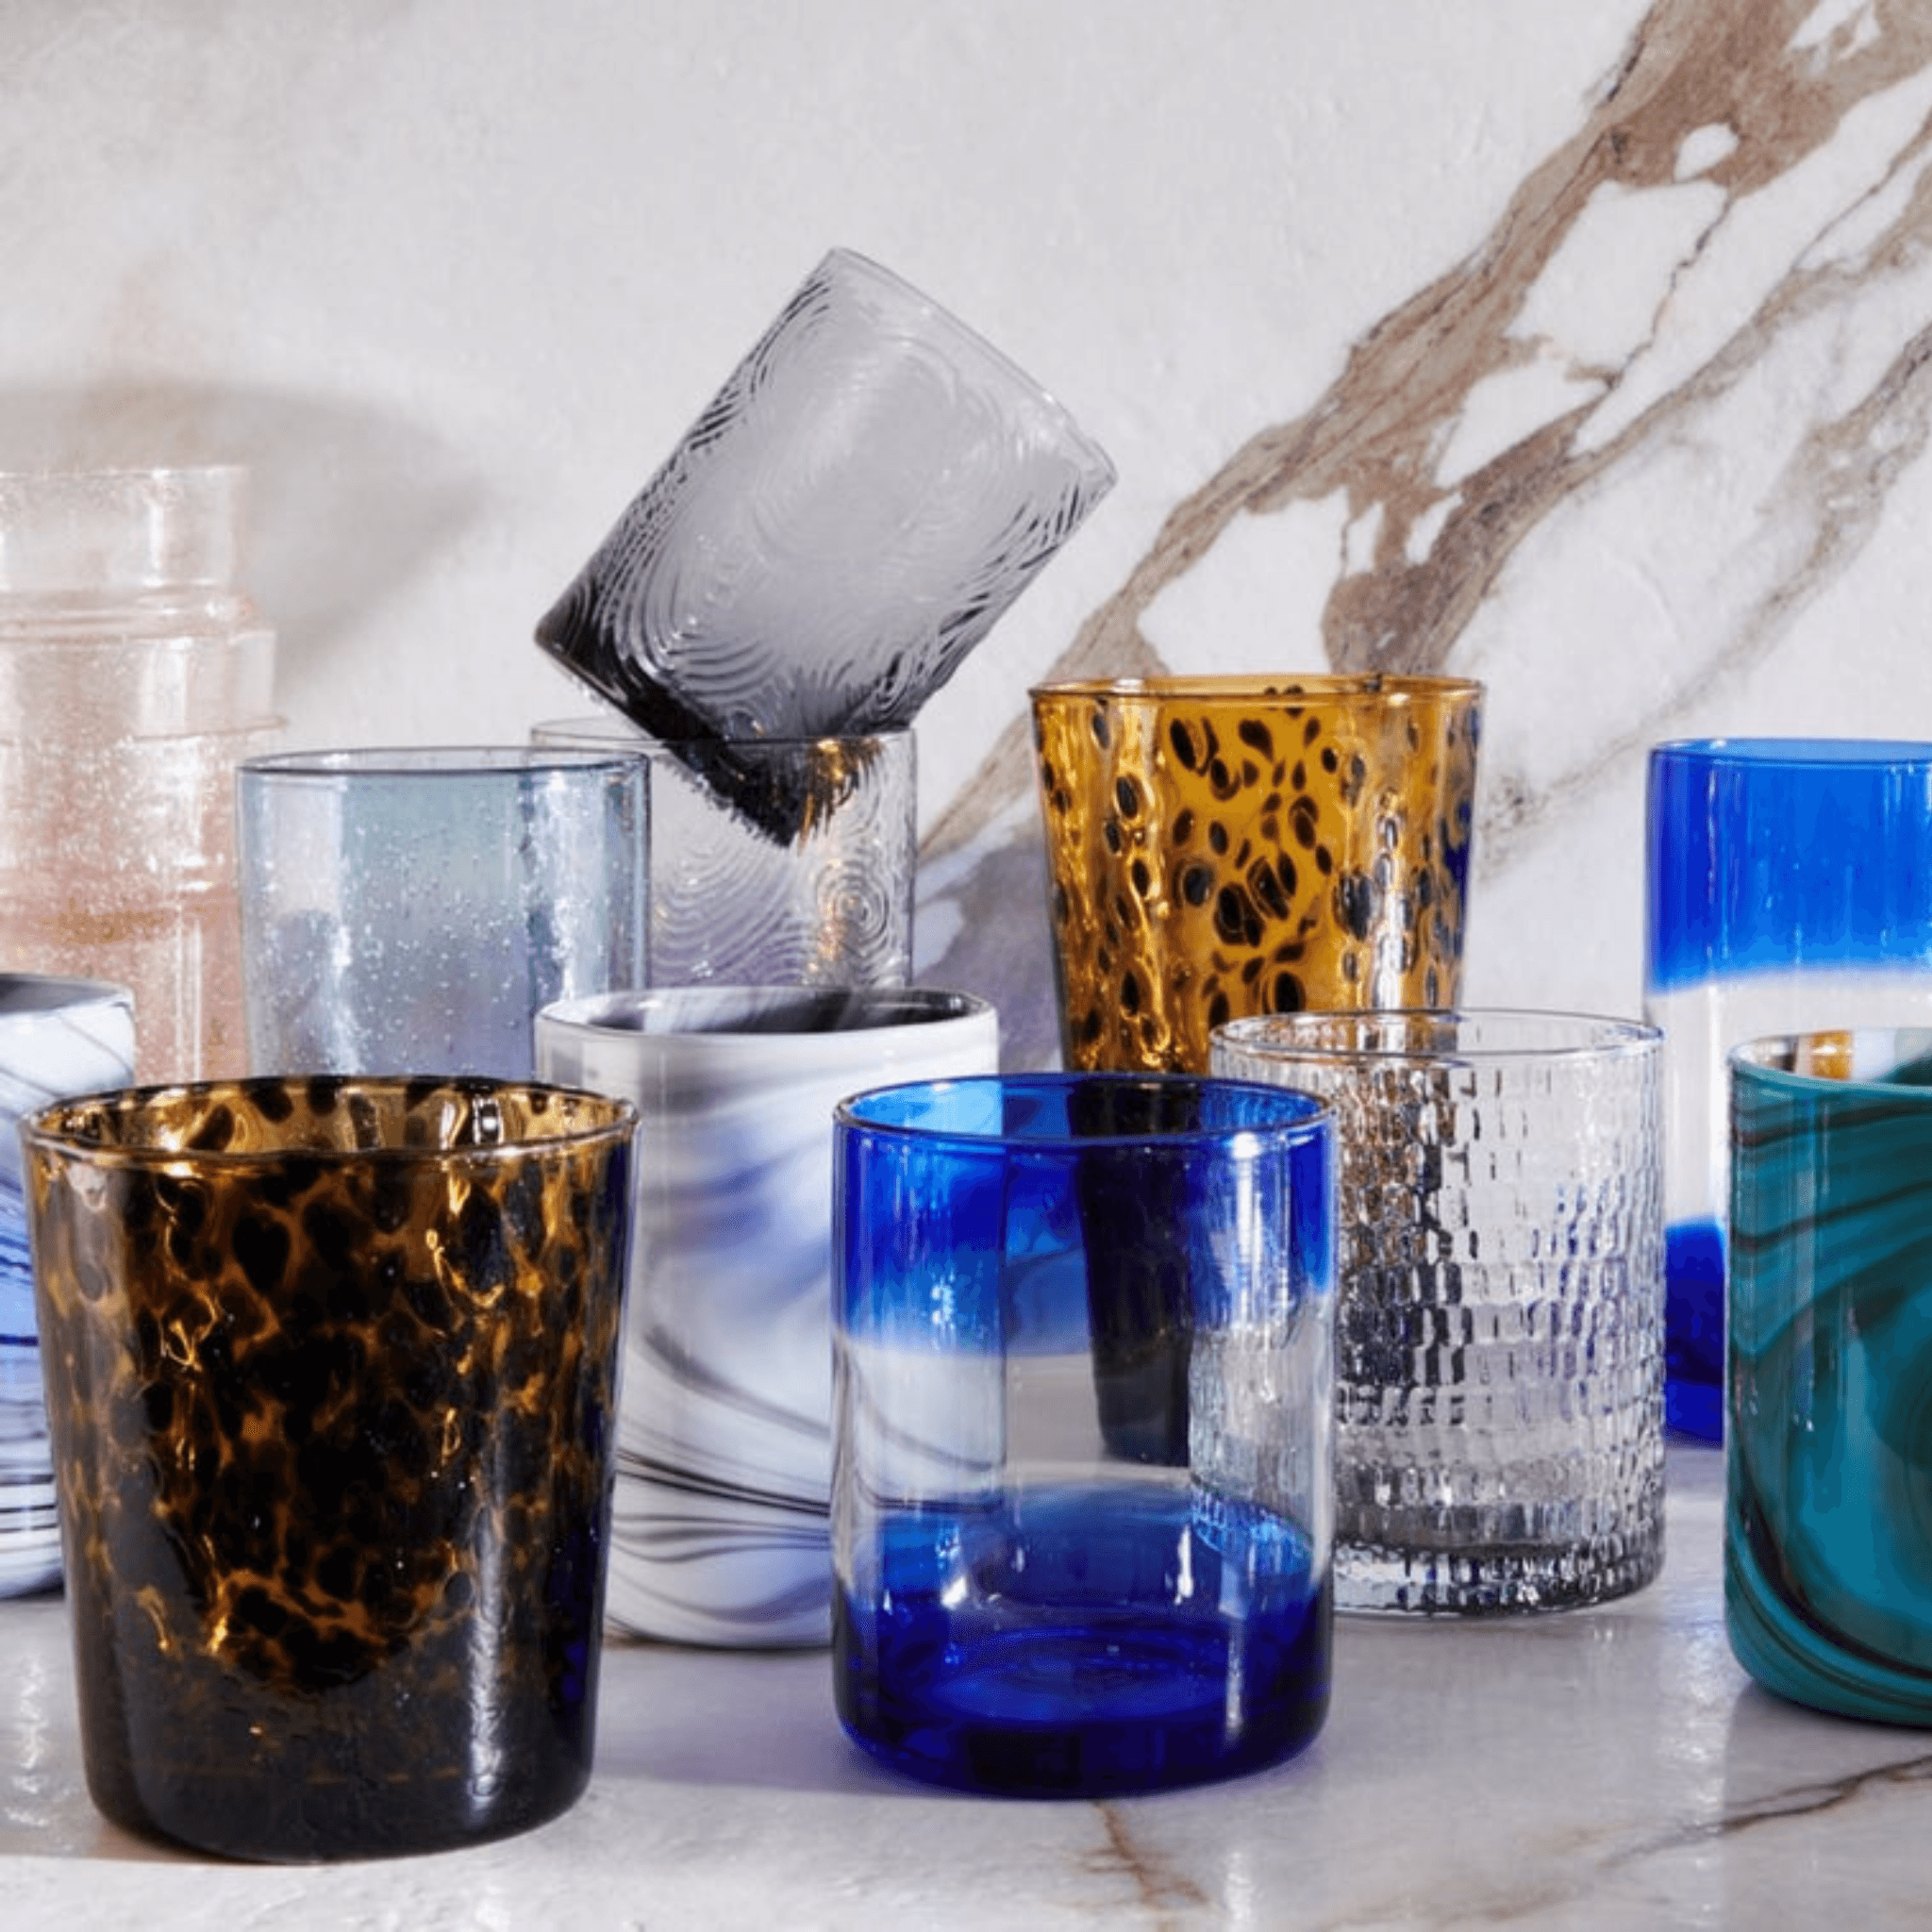 Unique Handblown Glass Water Tumblers Drinkware (Set of 6) - Marine